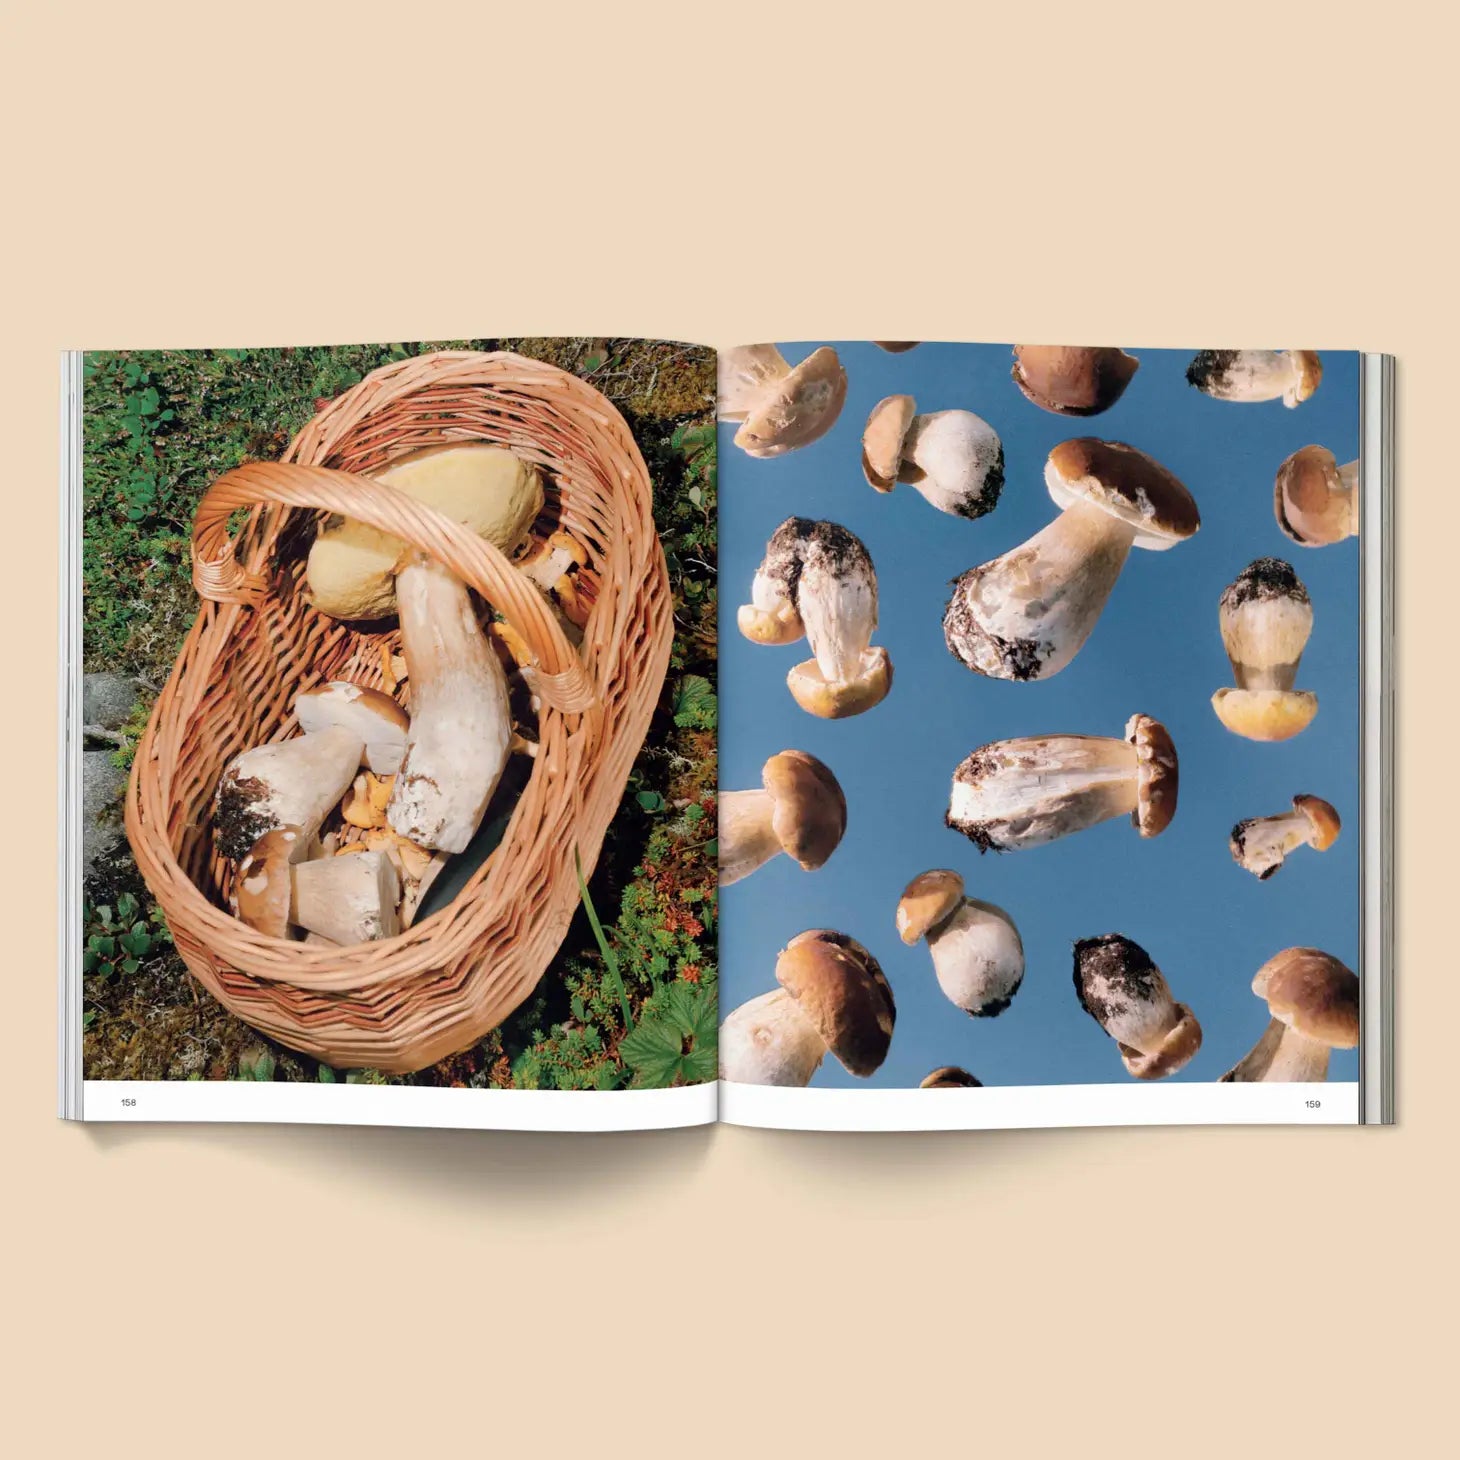 Broccoli Spores: Magical Mushroom Photography Book| Prelude & Dawn | Los Angeles, CA